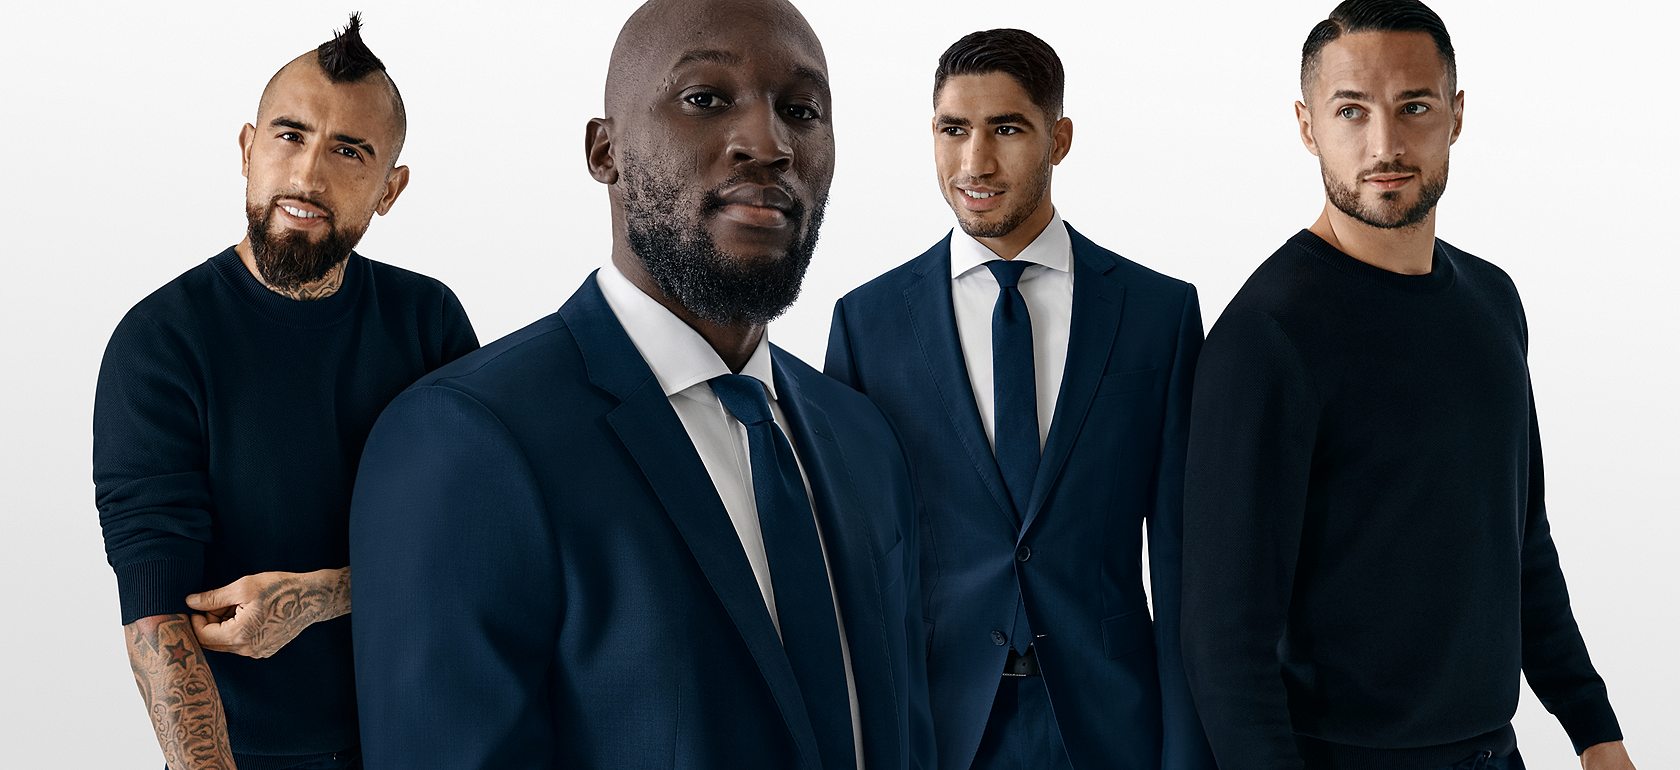 FC inter team dressed in dark blue BOSS Suits